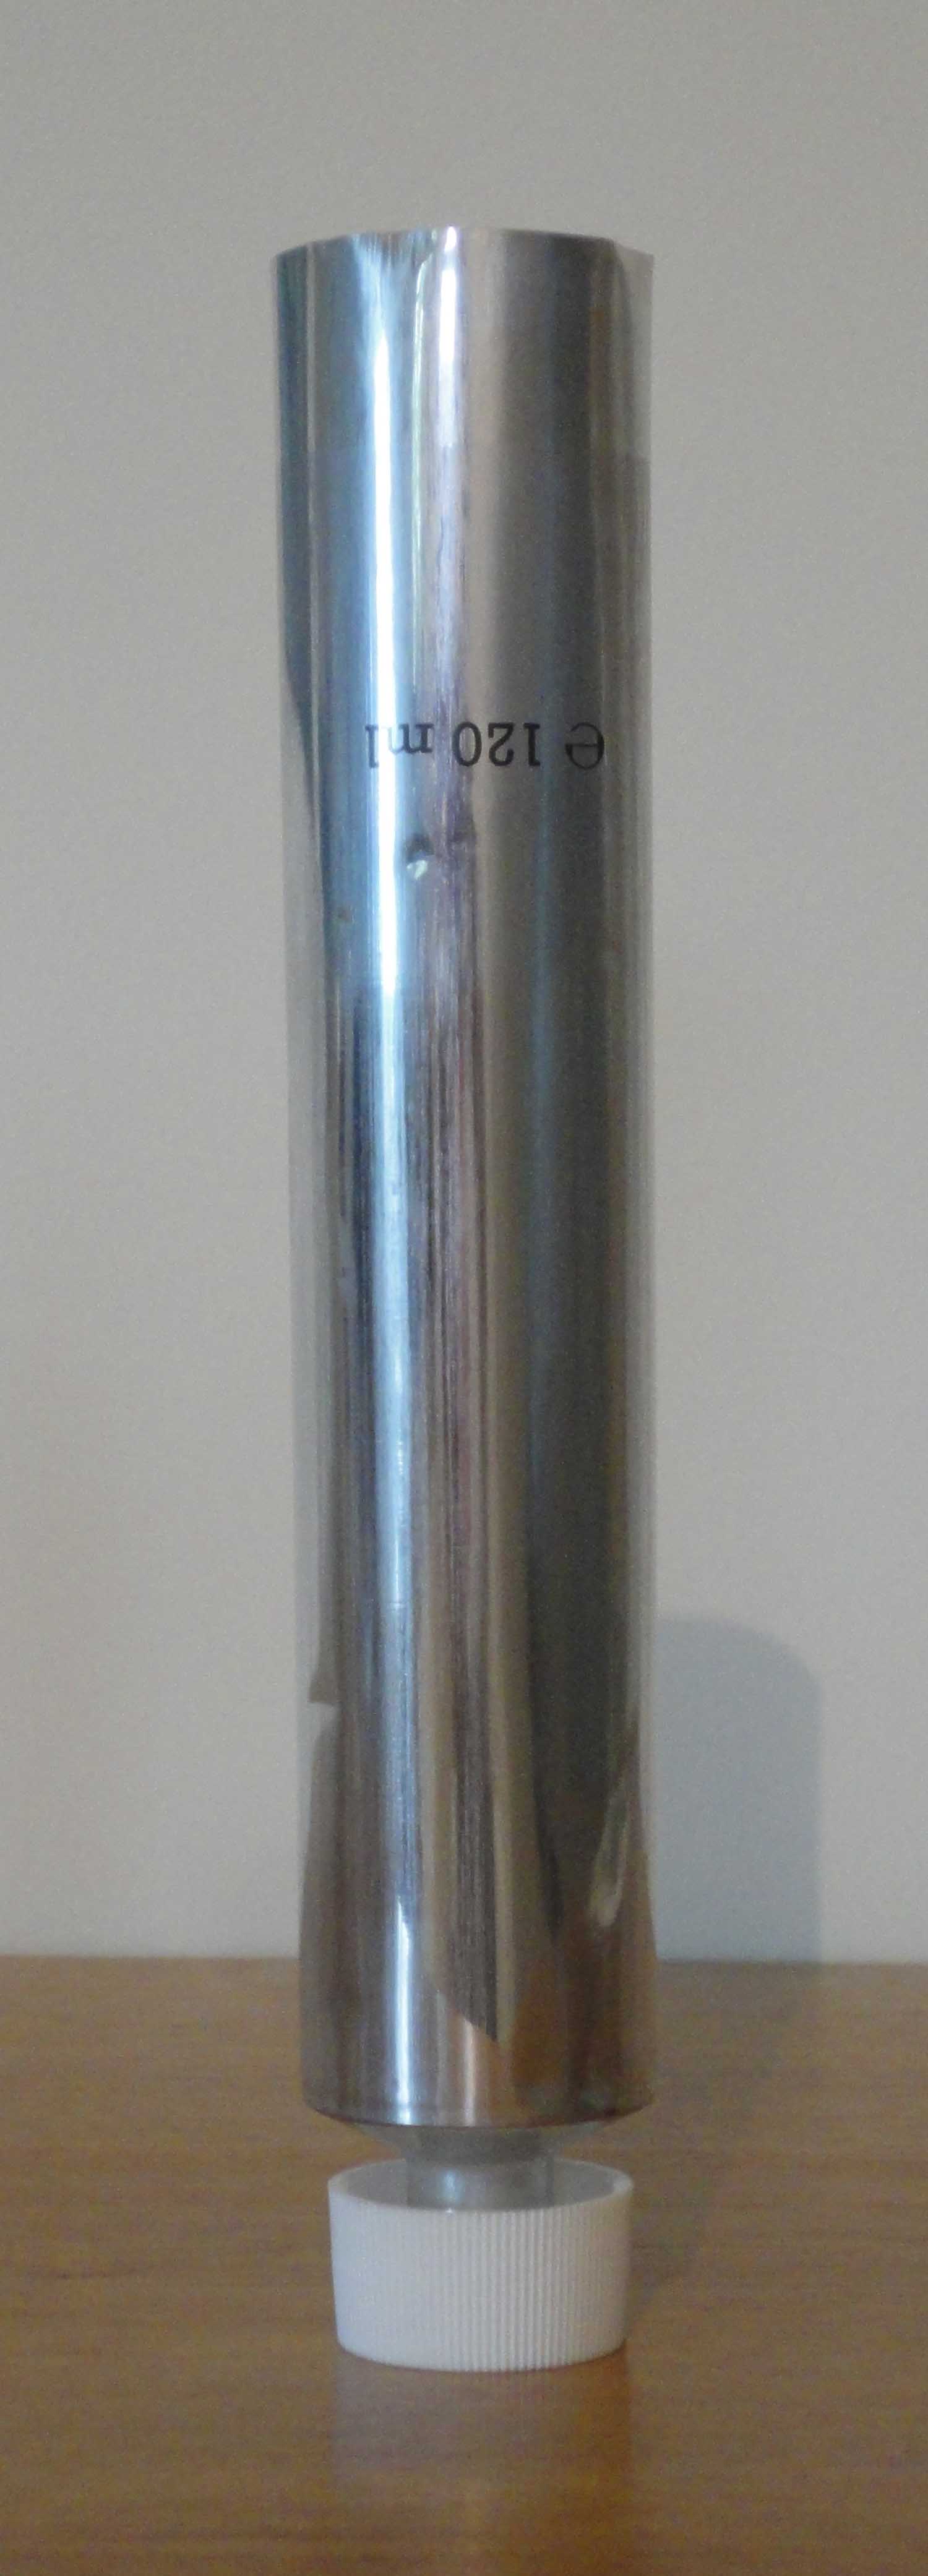 tubes-aluminium-vides-huile-art-techniques-peinture-5.jpg